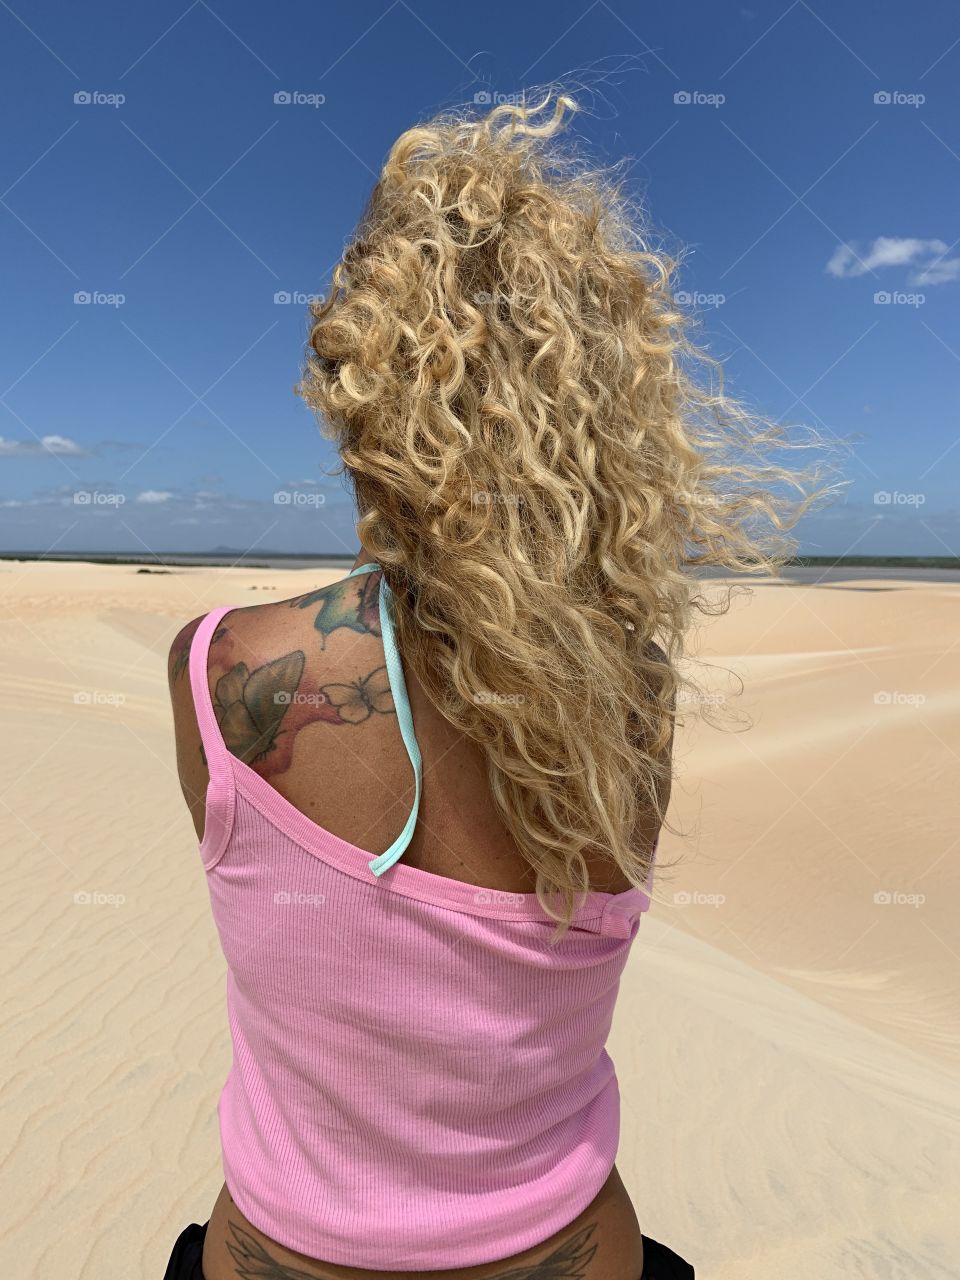 Blond. Hair woman with pink shirt against desert 